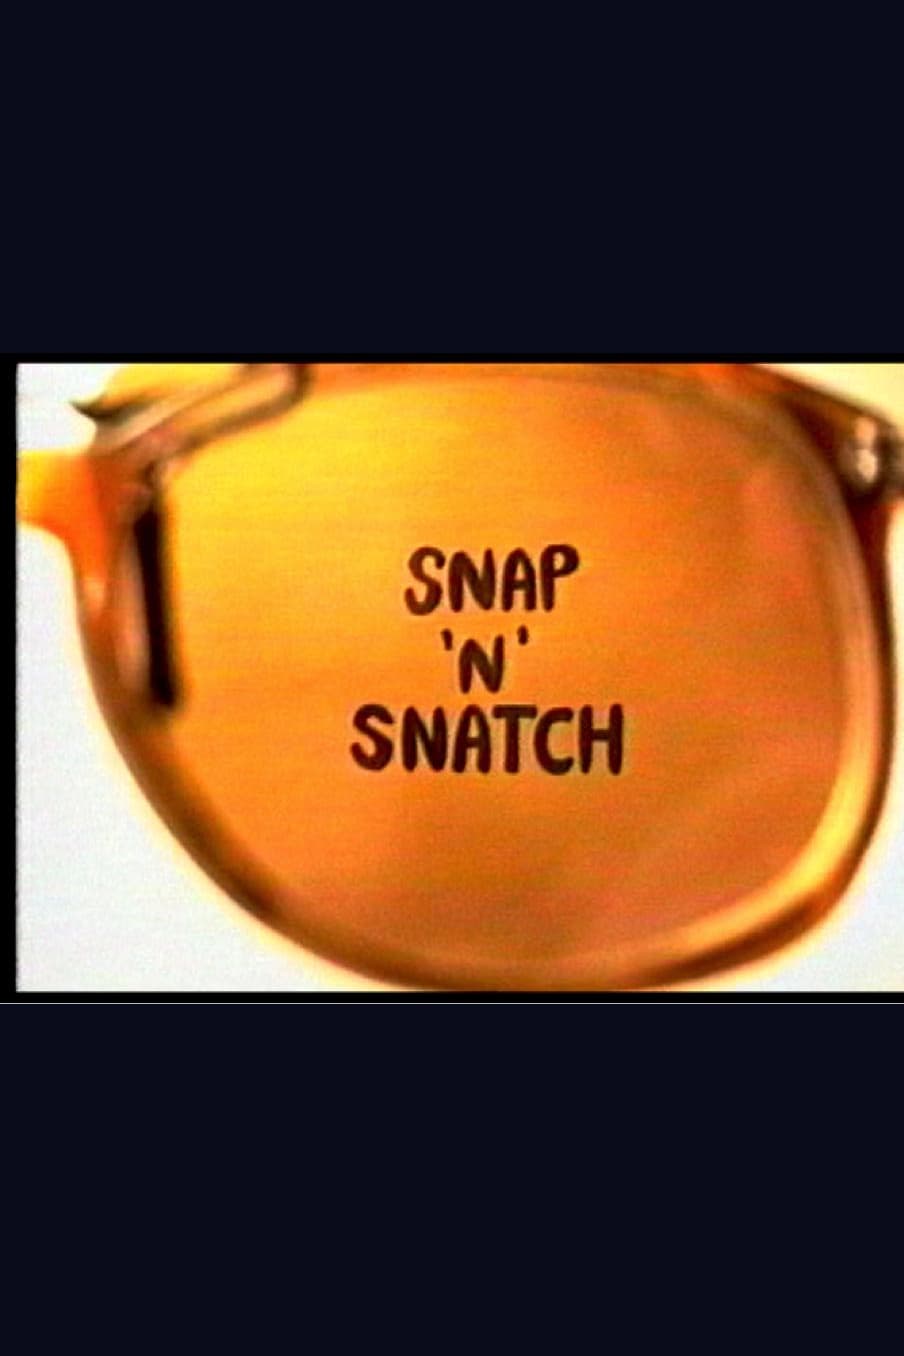 Snap 'n Snatch (1990)